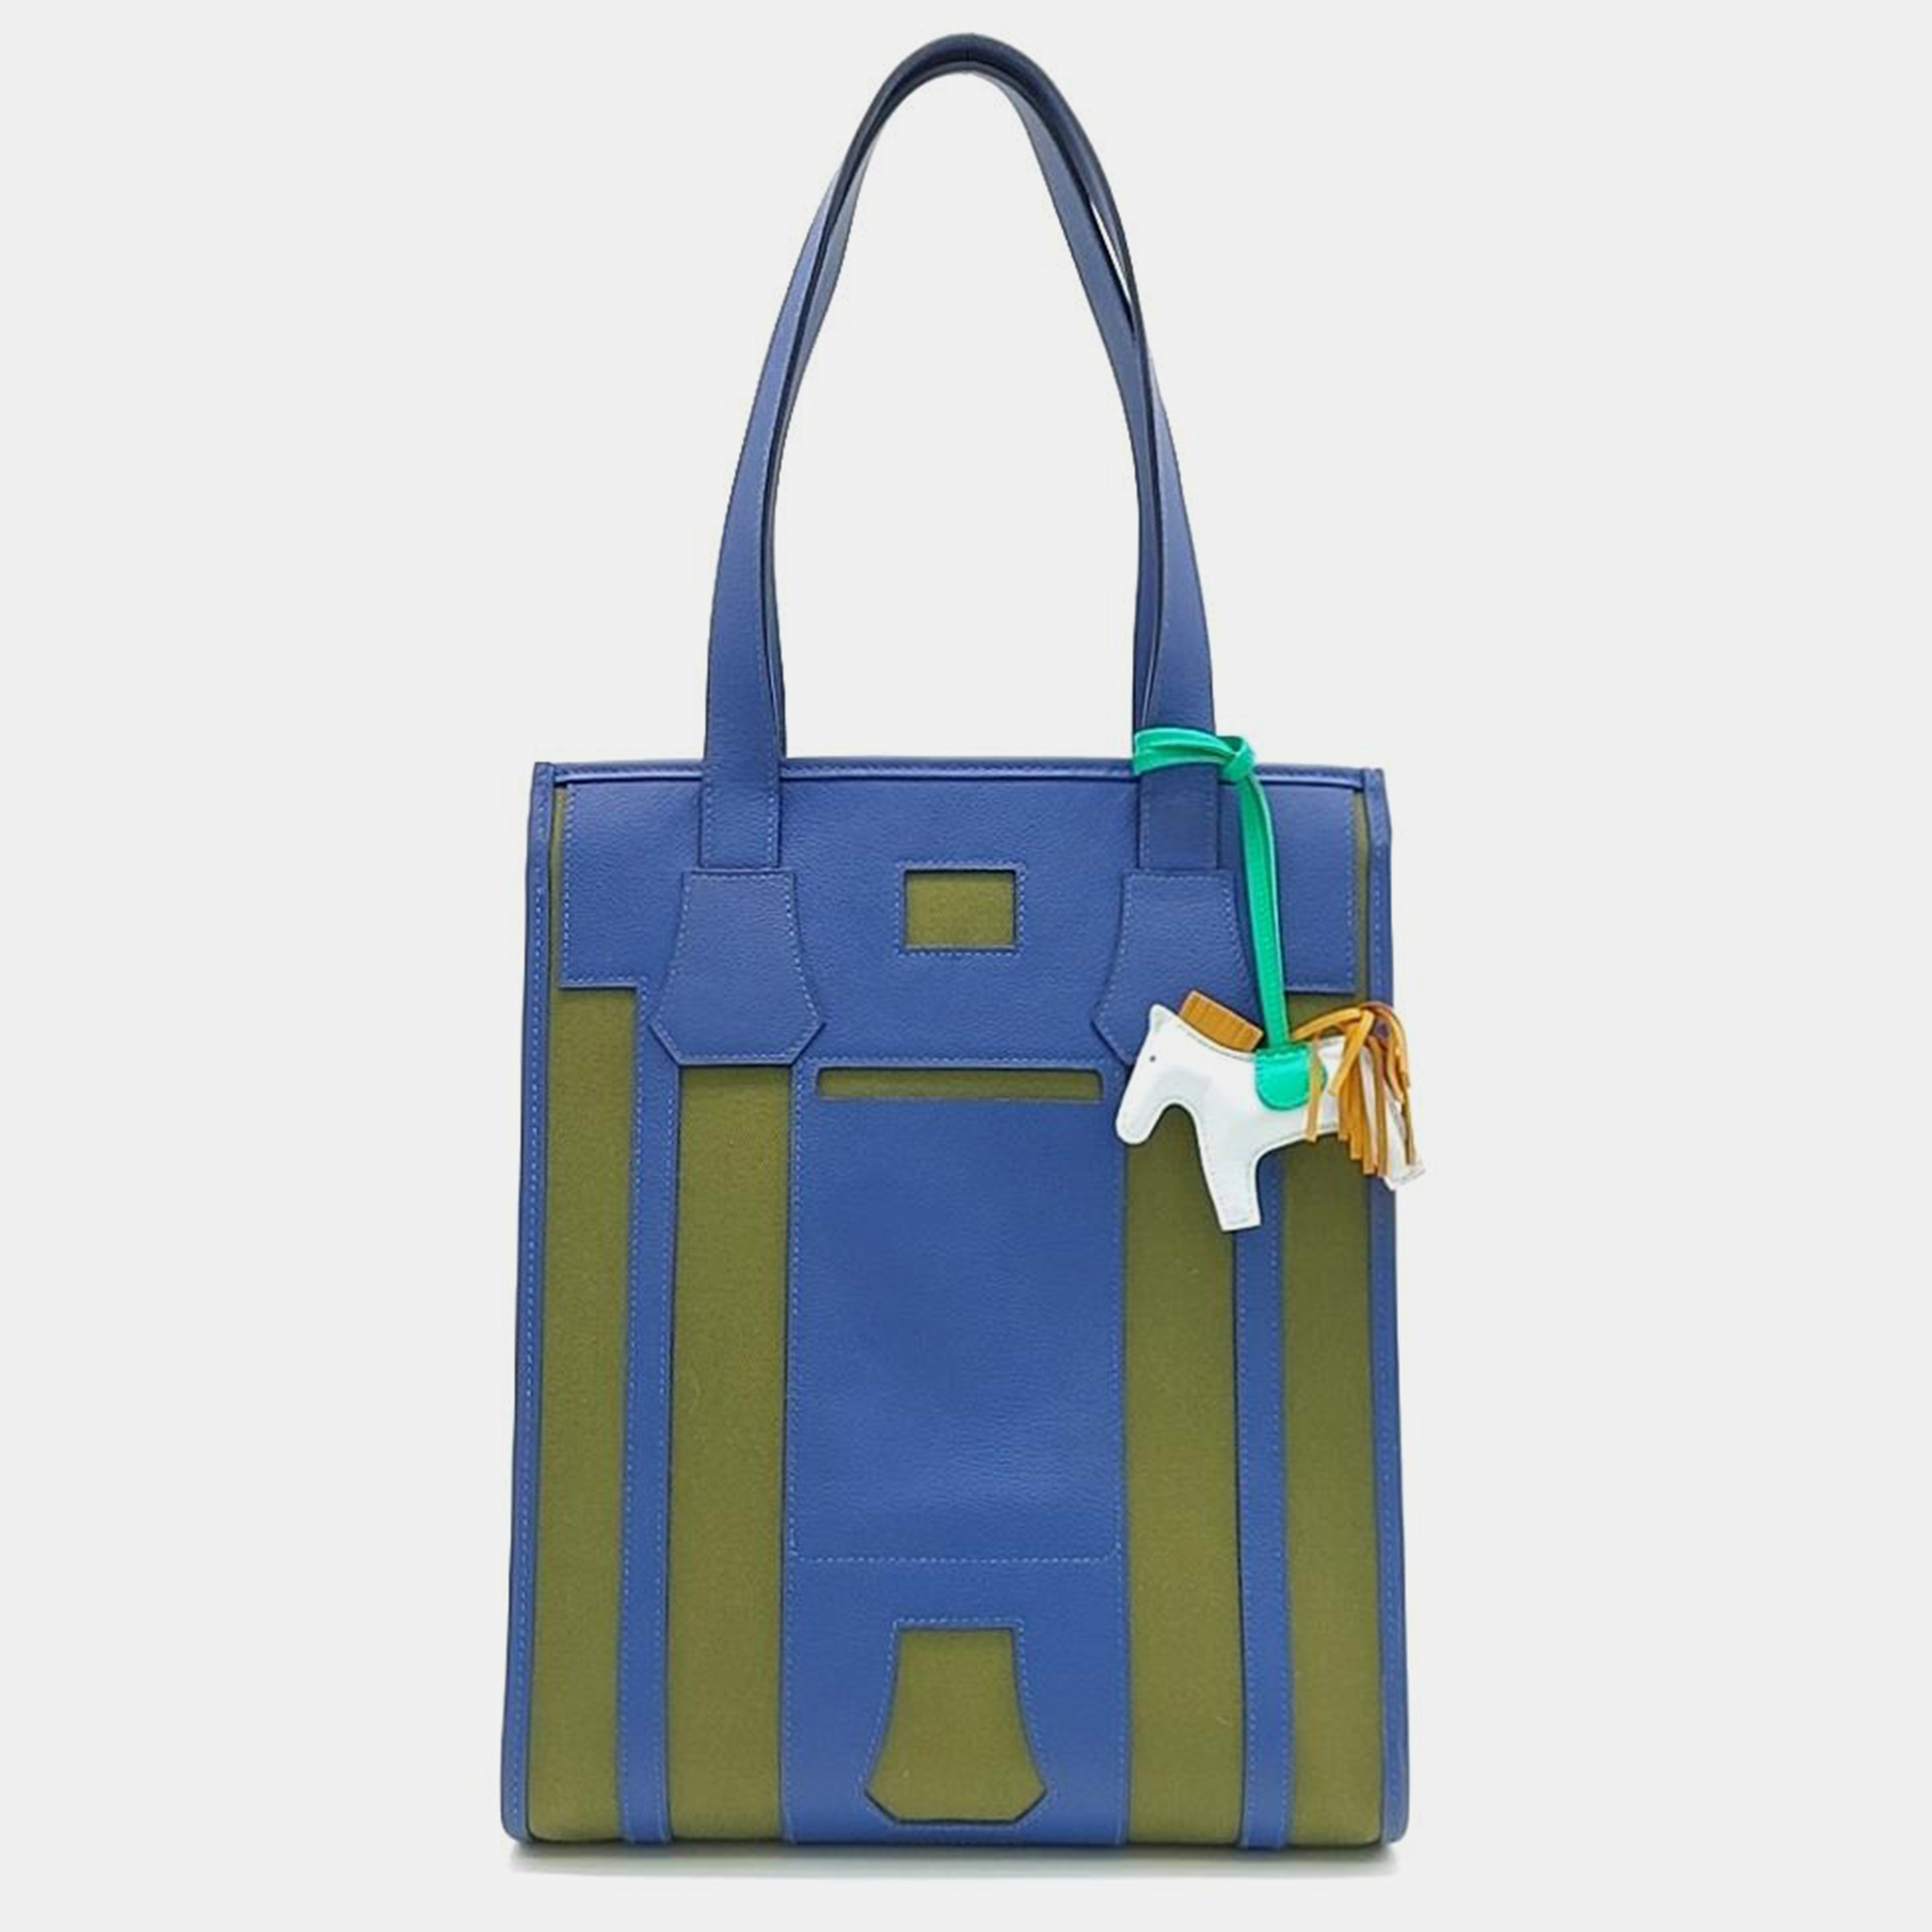 Hermes blue petit ash tote bag & rodeo bag charm